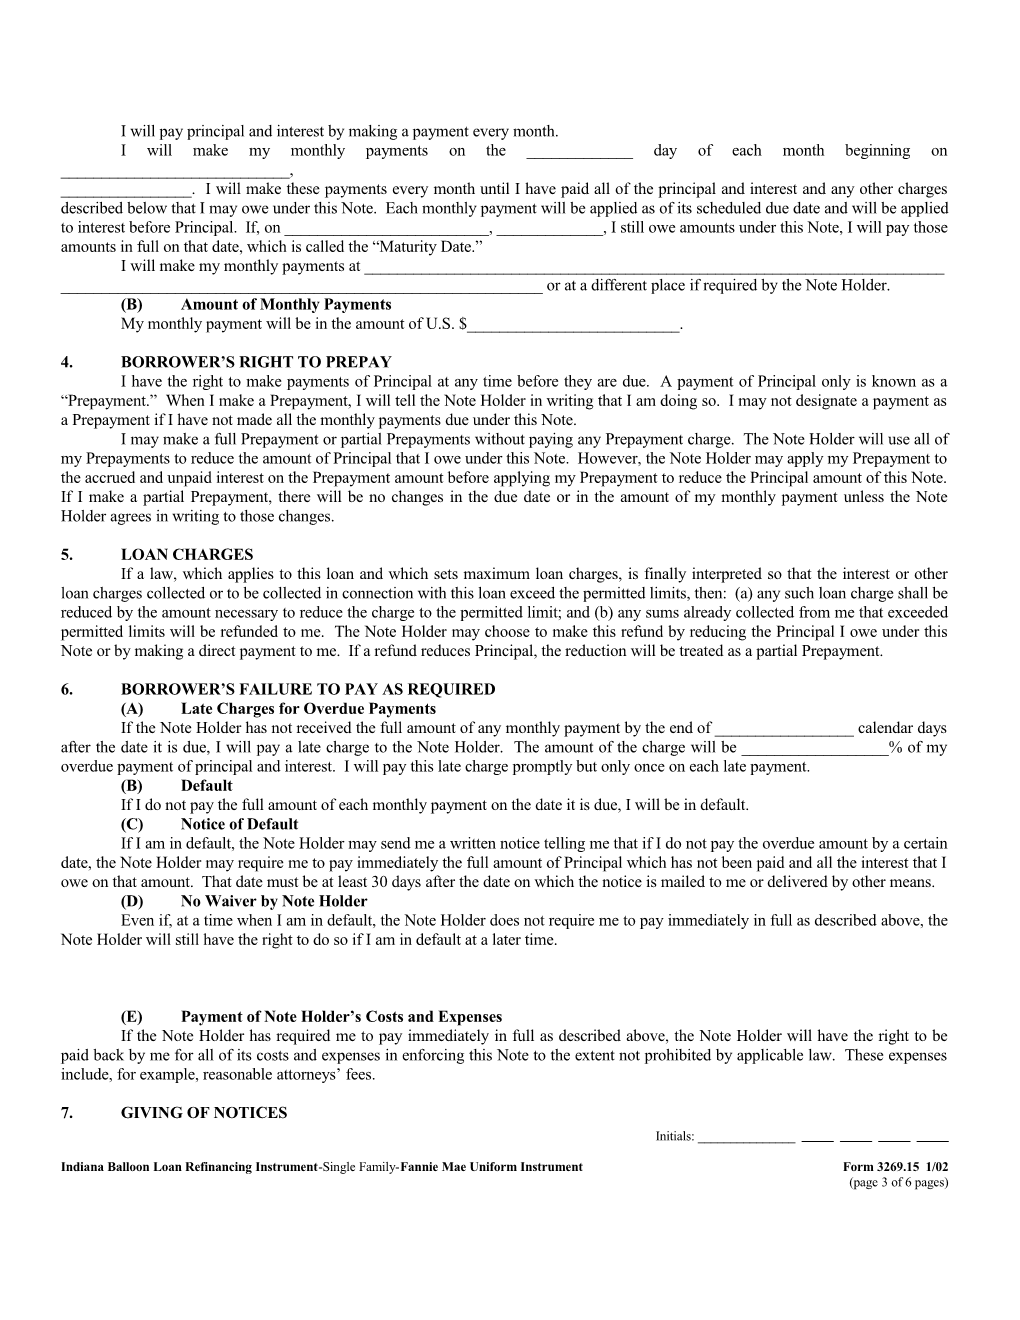 Indiana Balloon Loan Refinancing Instrument (Form 3269): Word